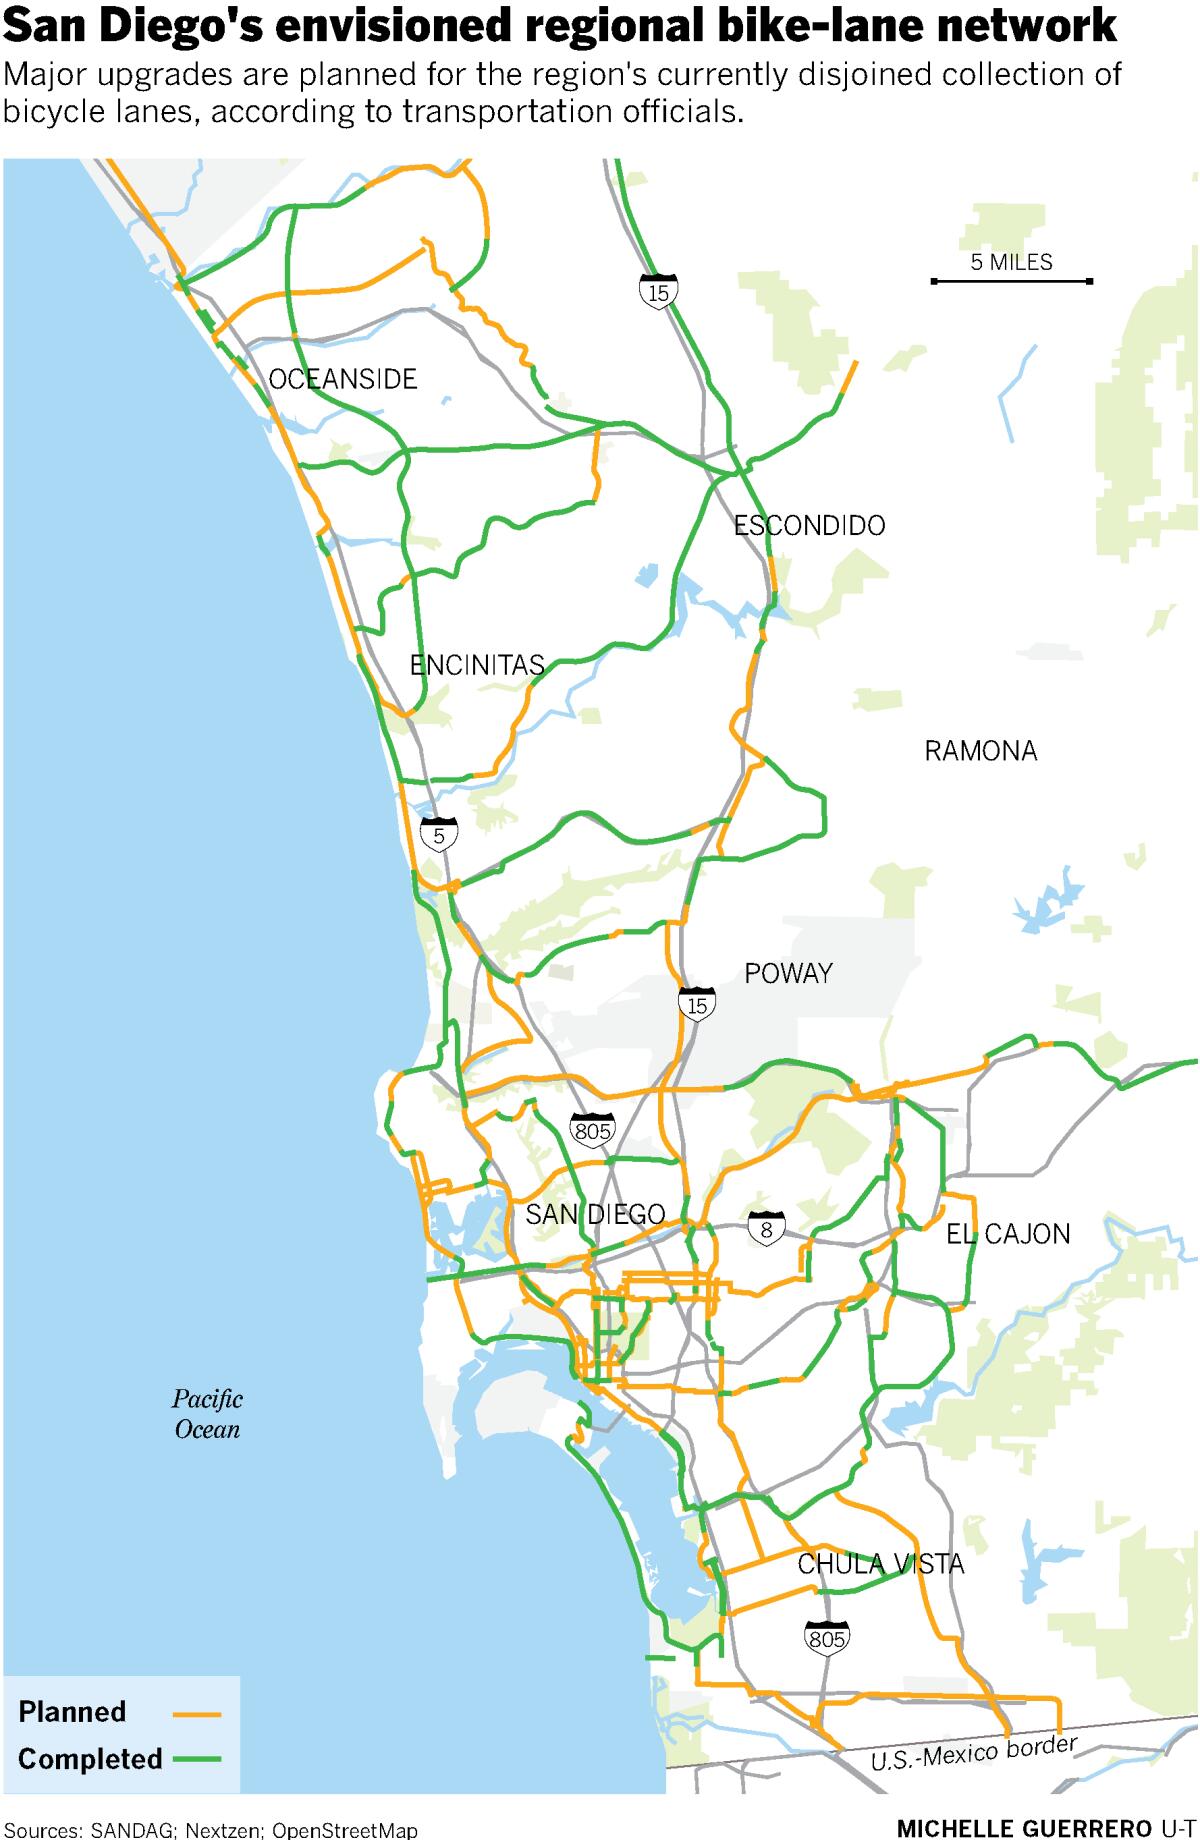 San Diego's envisioned regional bike-lane network